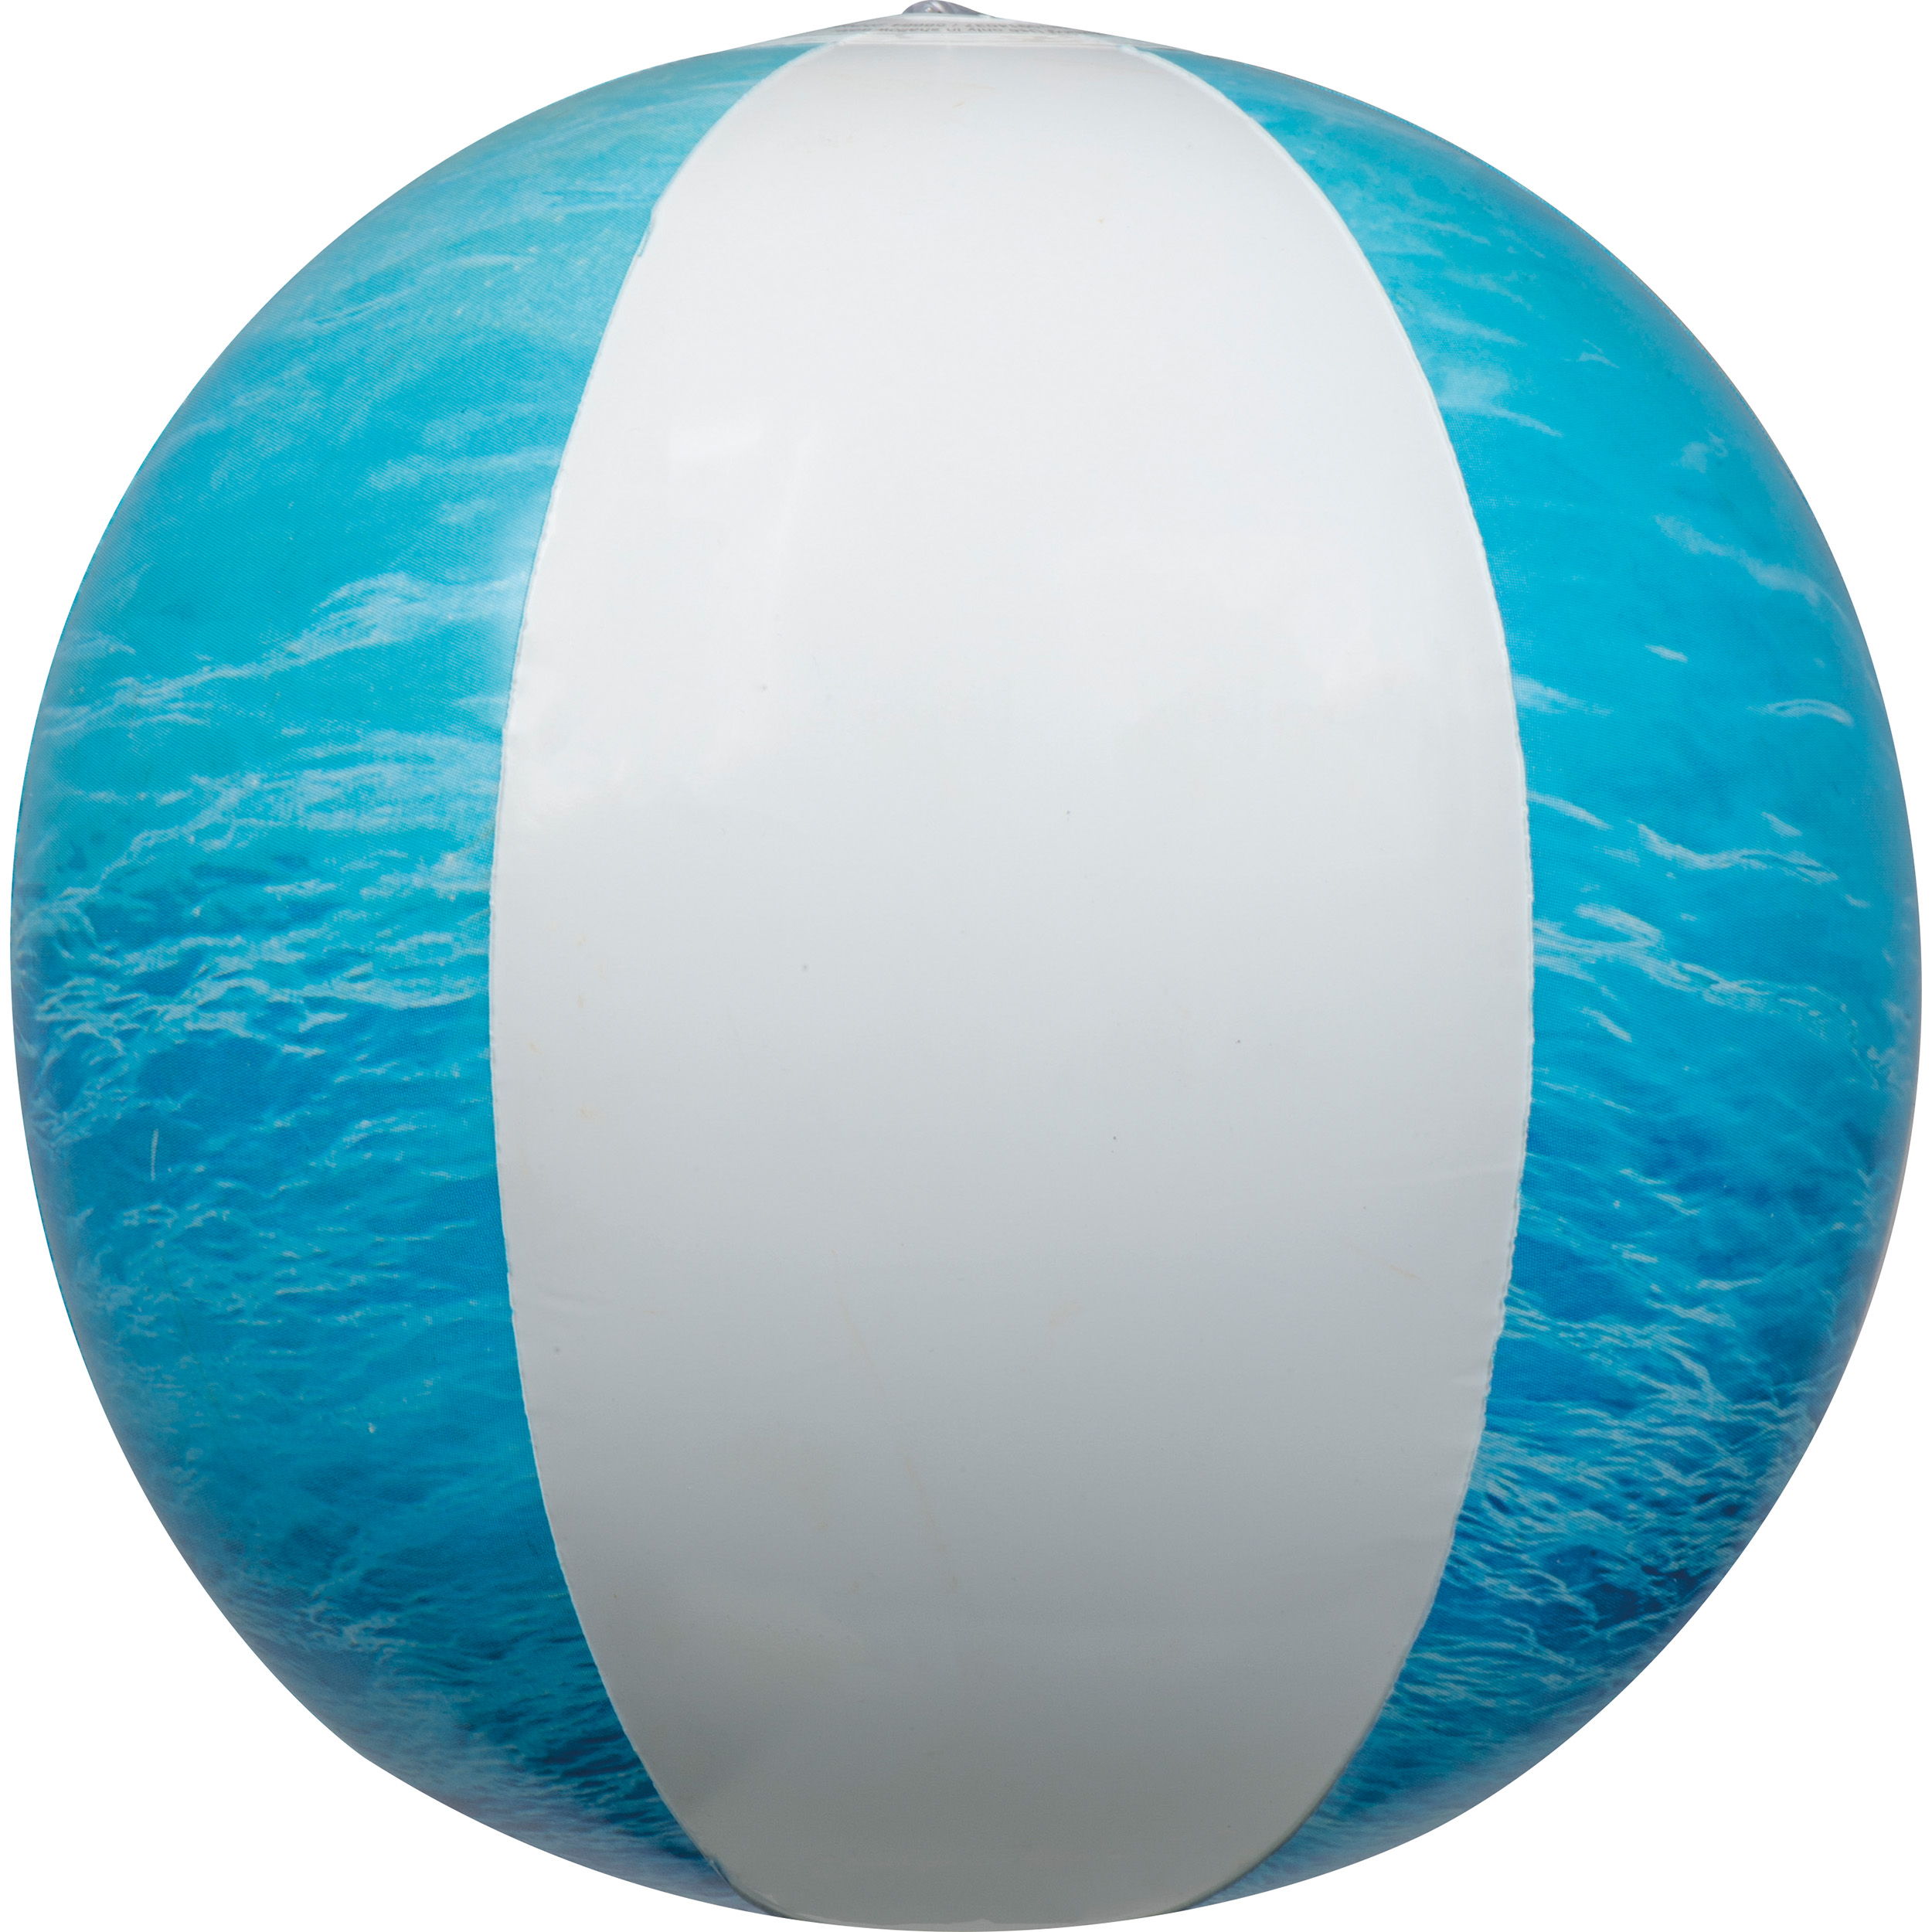 Strandball mit Meeroptik